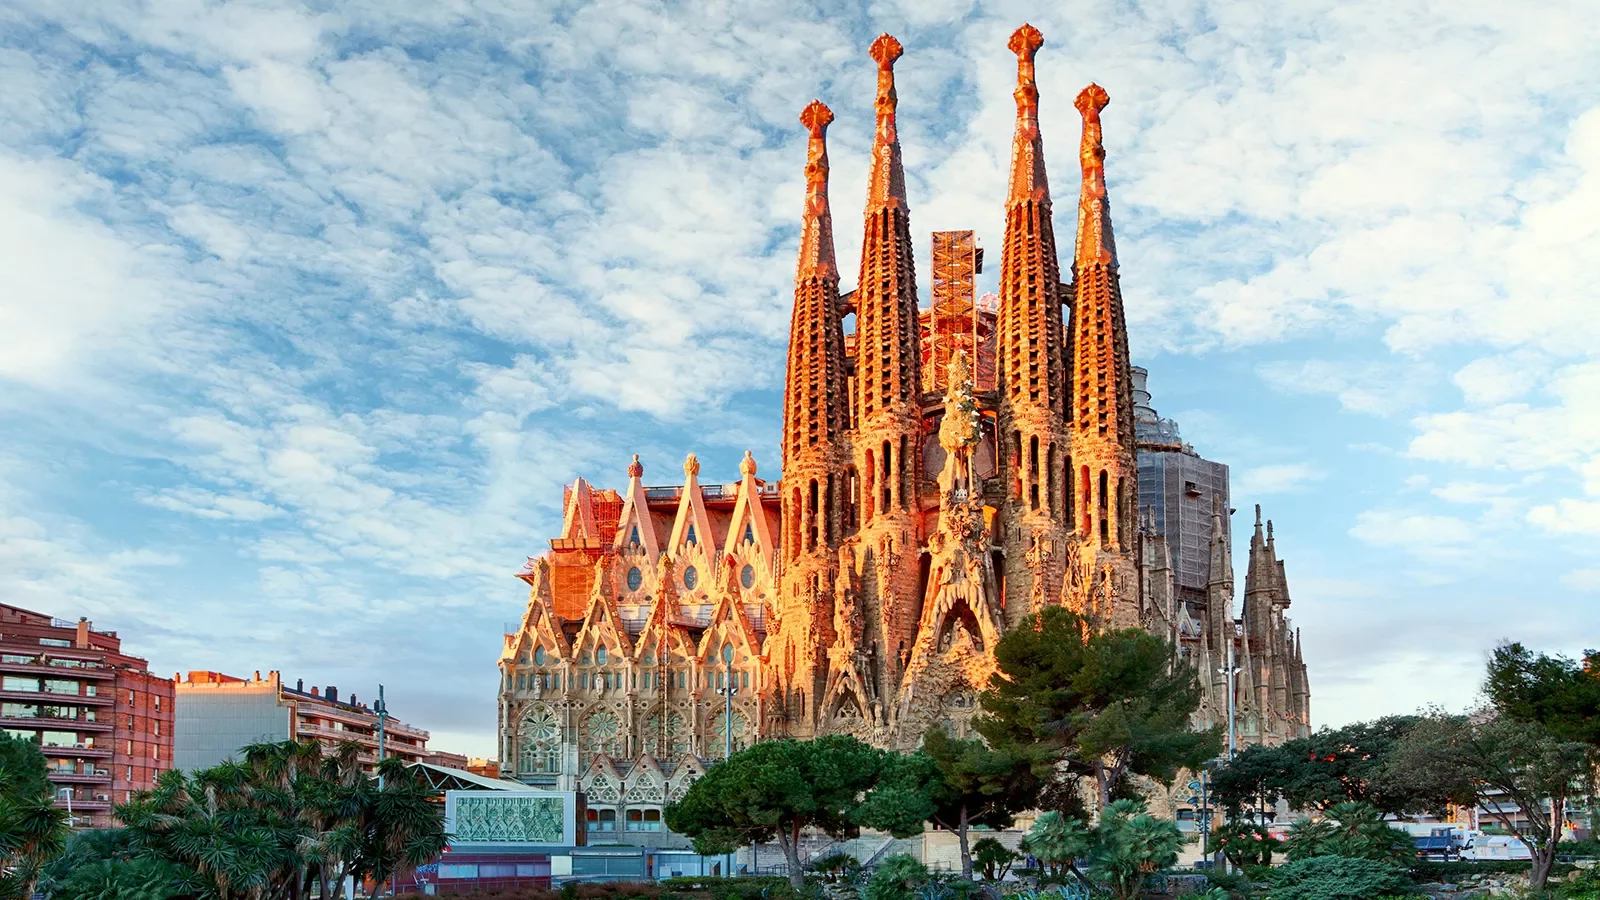 Sagrada Familia basilica in Barcelona.